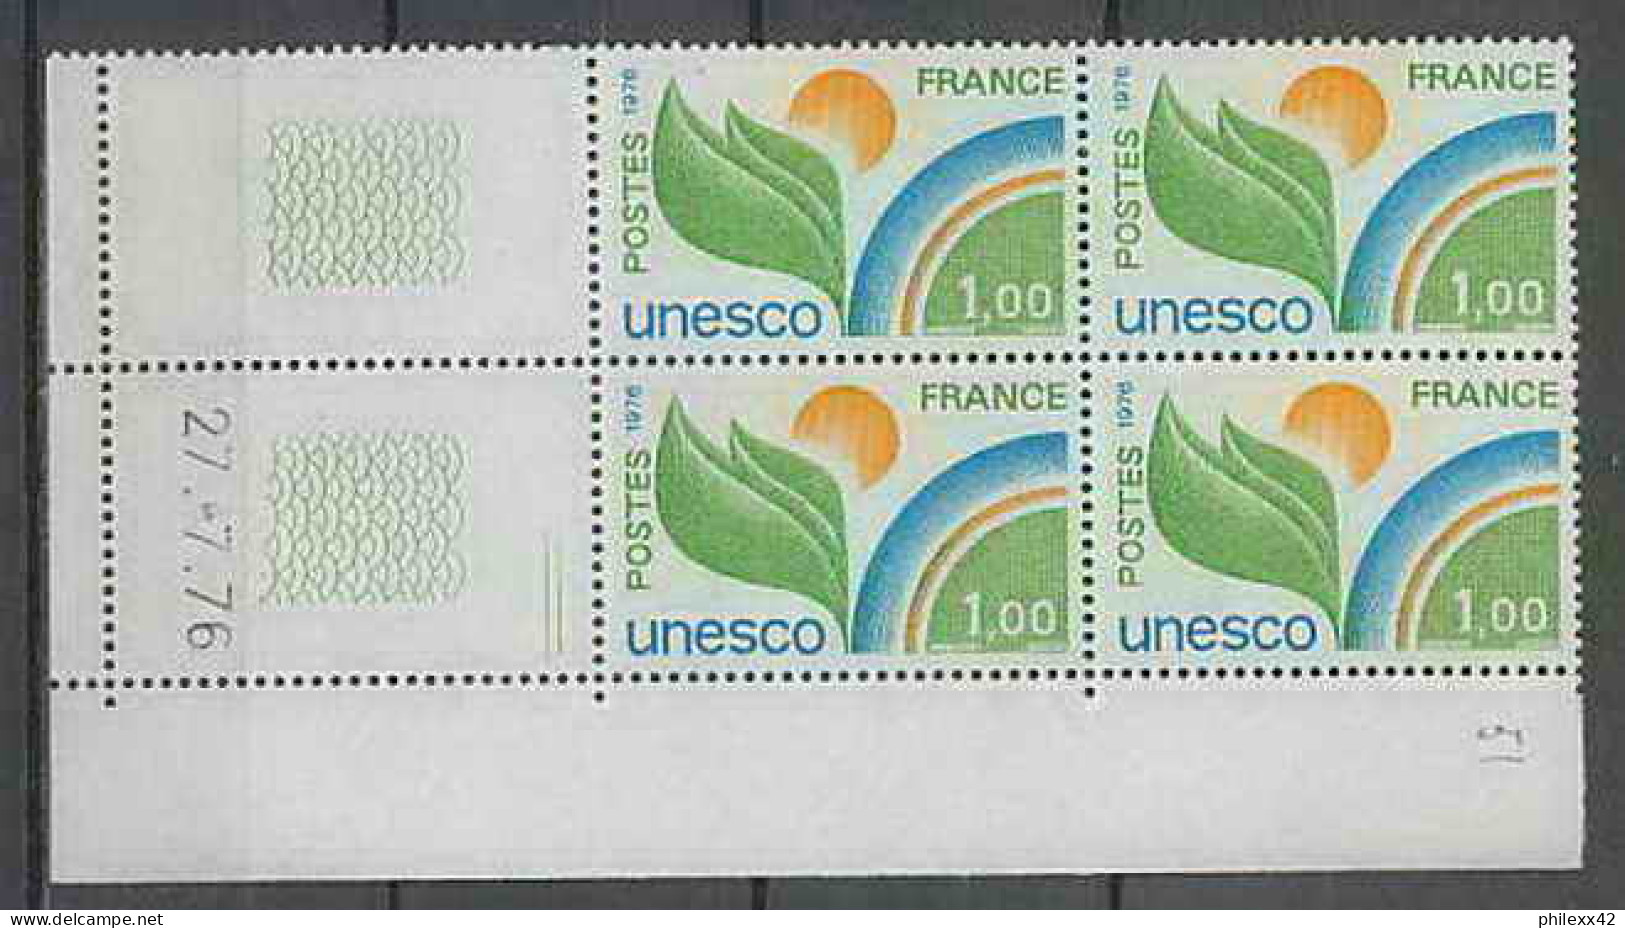 1308 - France - Coin Daté TB Neuf ** Service Unesco N°51 Date 27/7/1976 2 Traits  - Officials